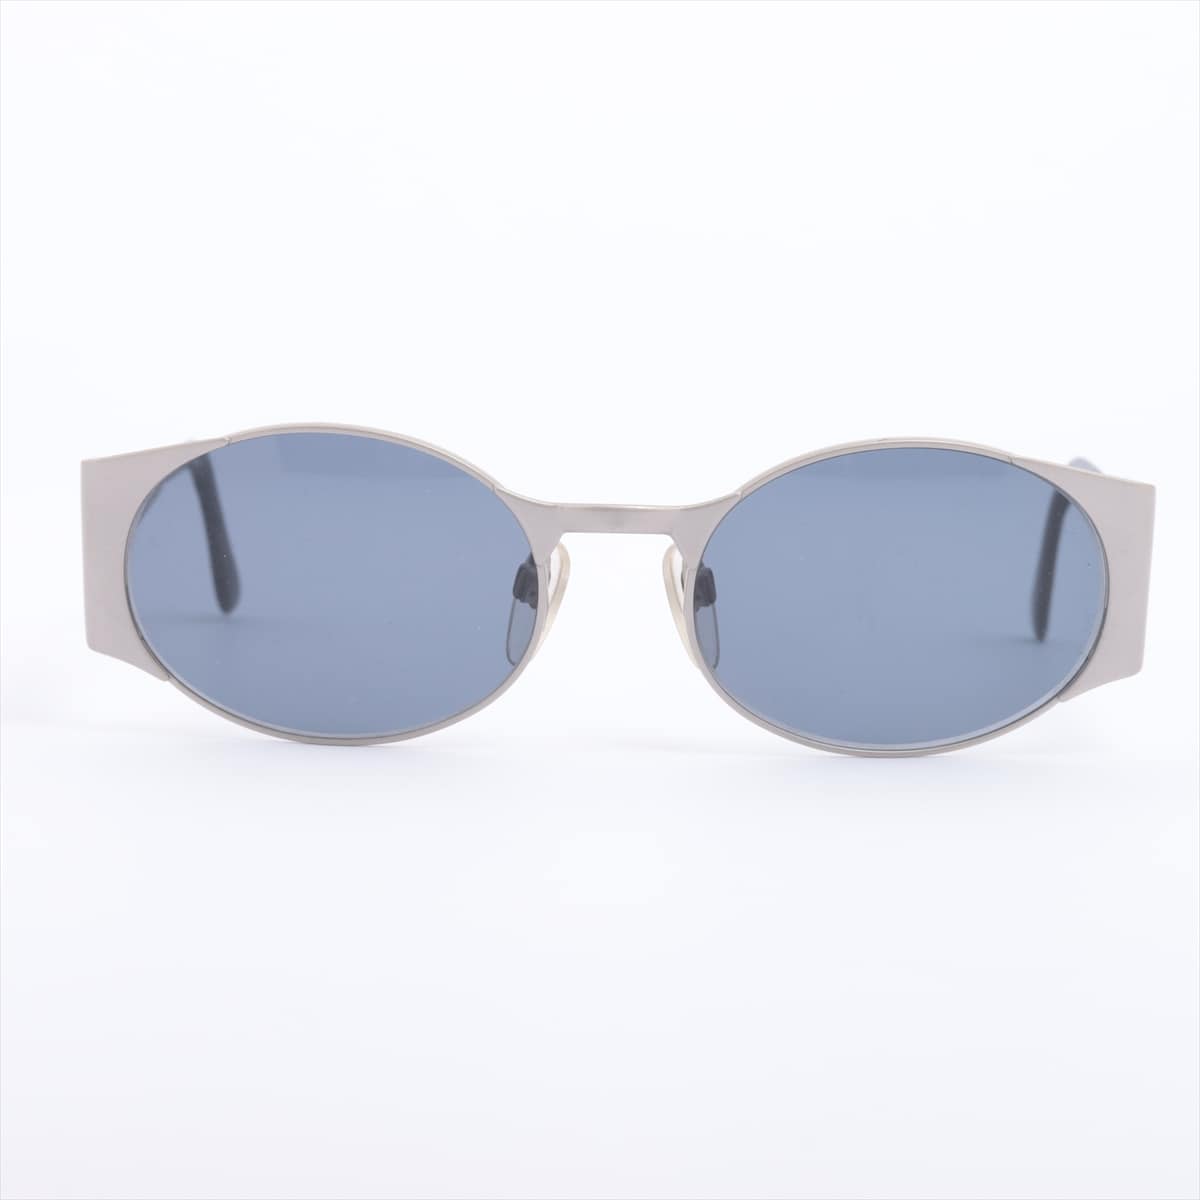 Chanel 06926 45002 Sunglasses metal Silver